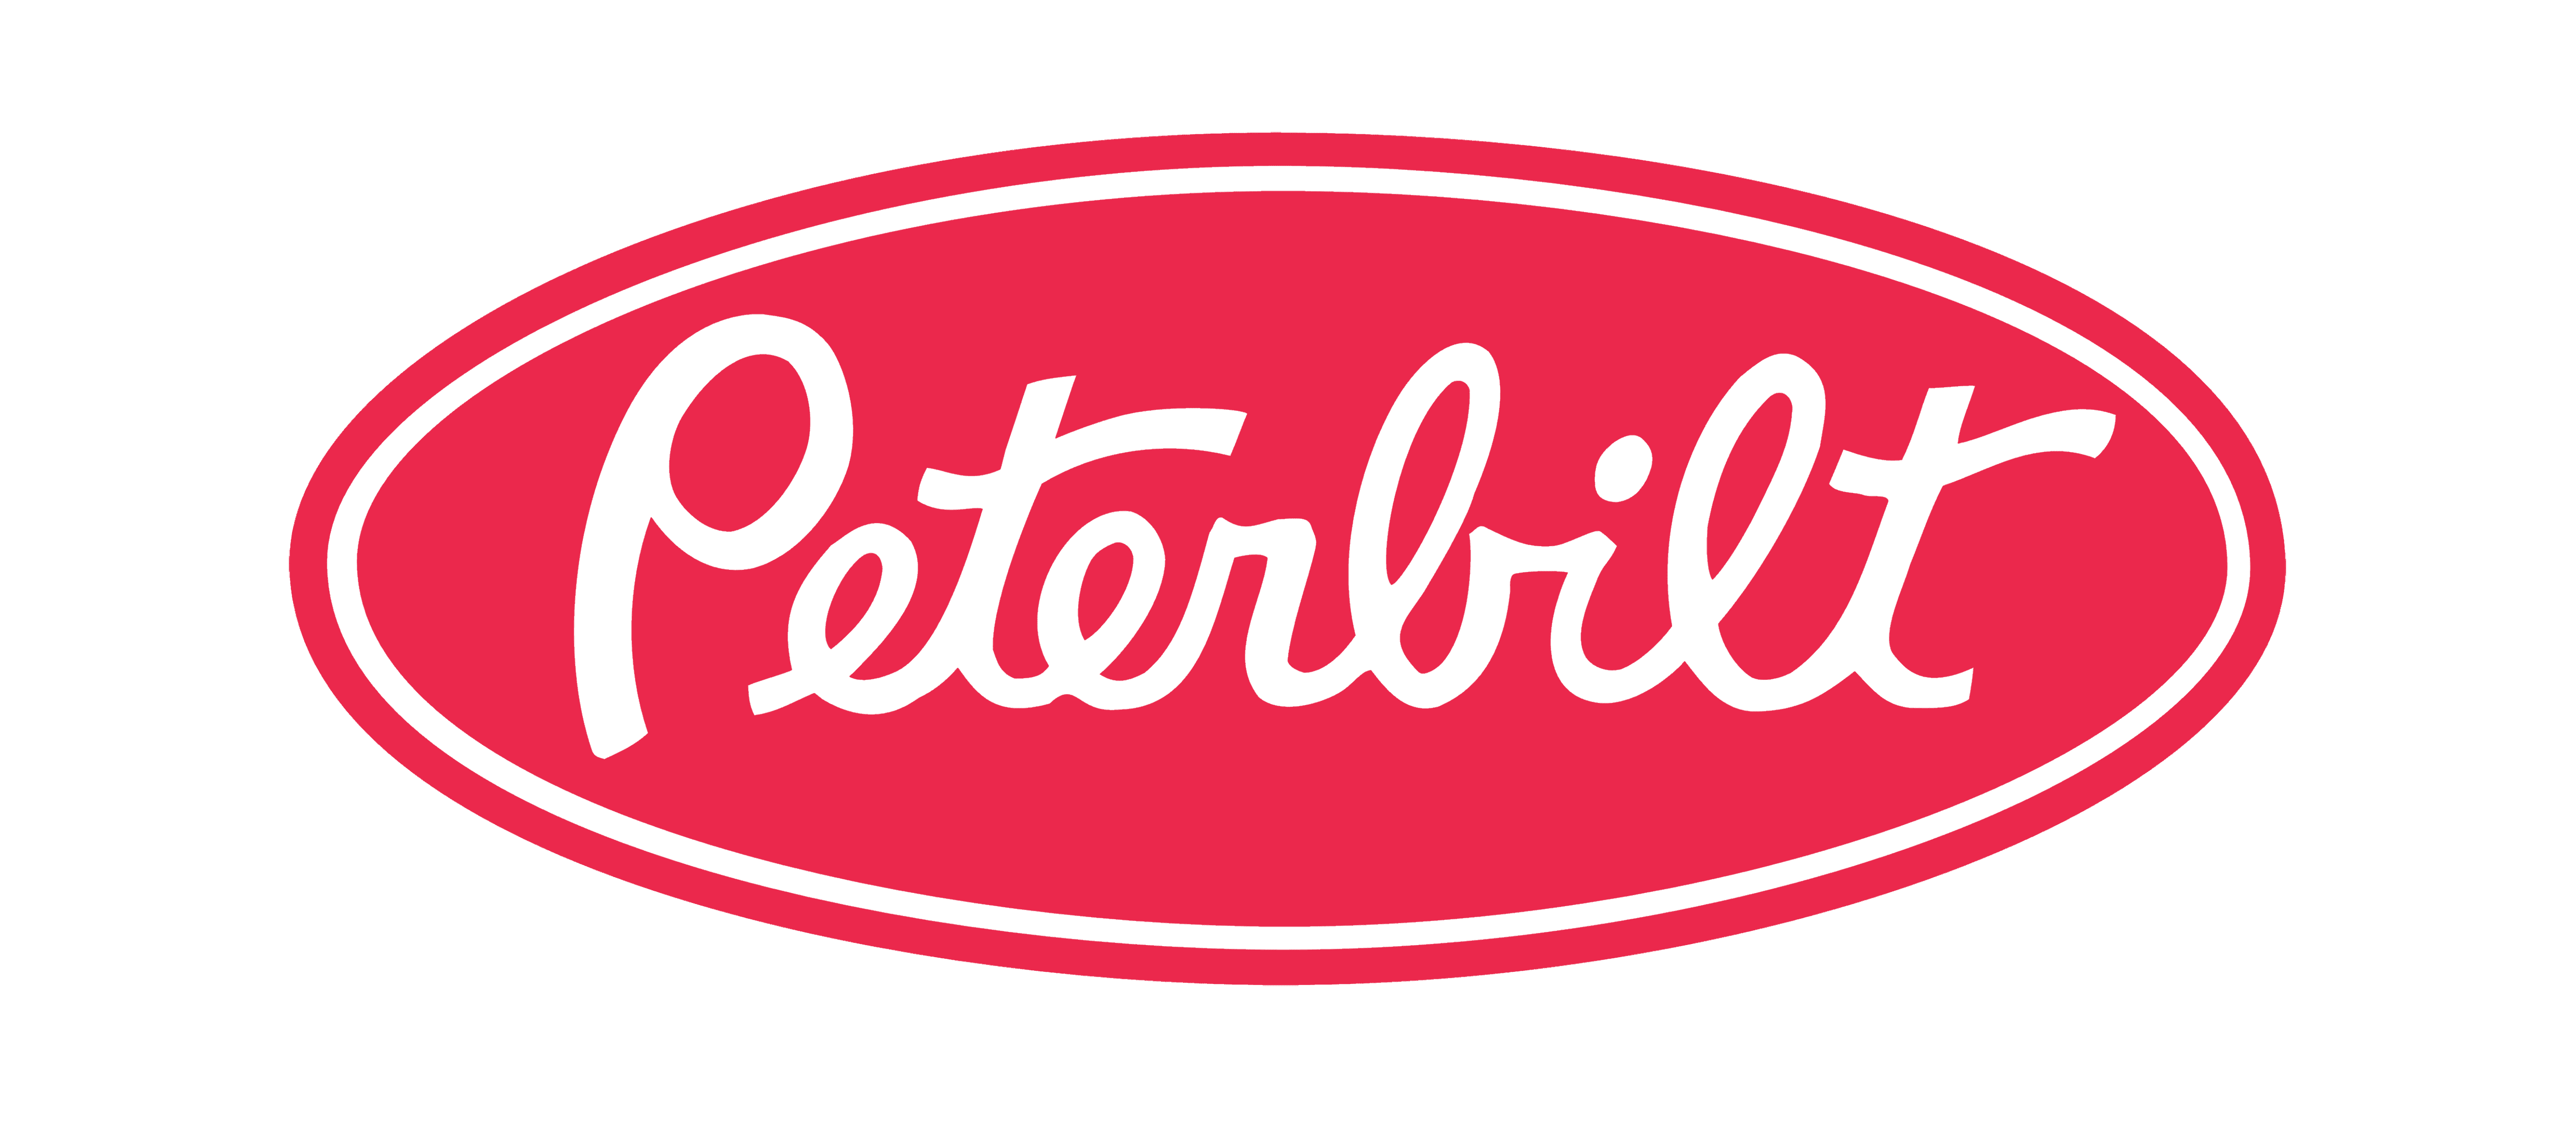 Logo Peterbilt